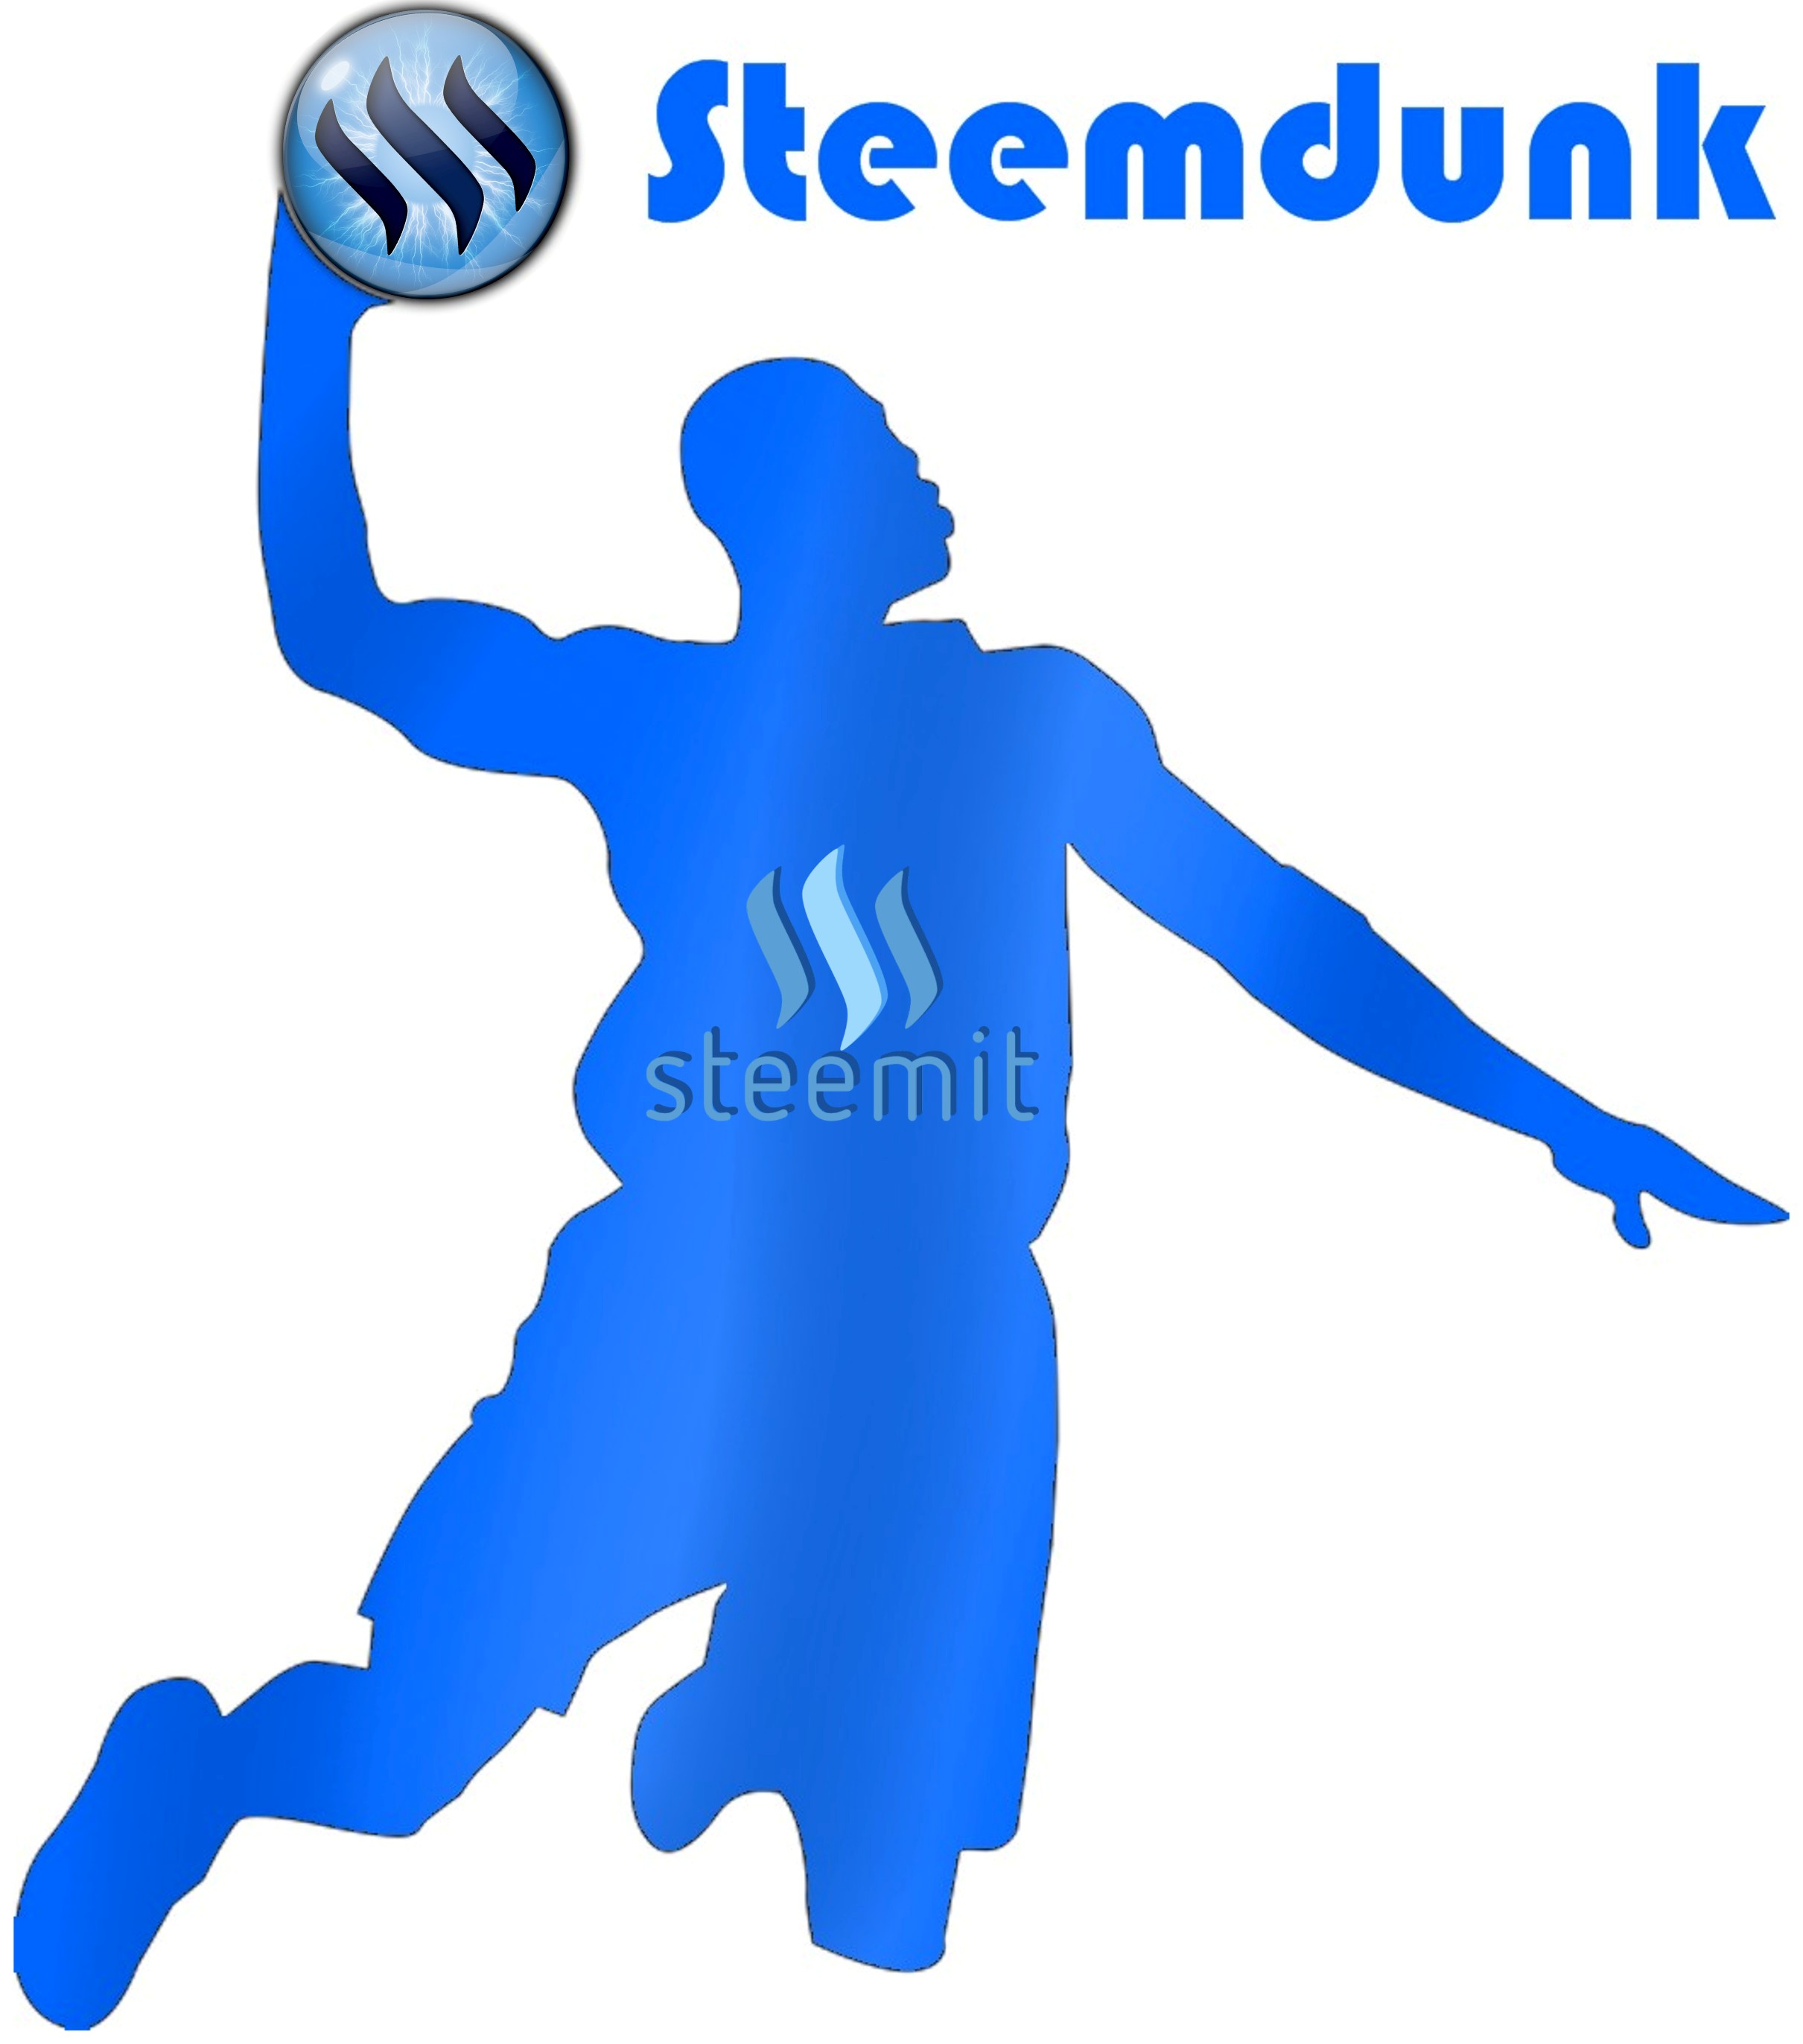 SD logo.jpg